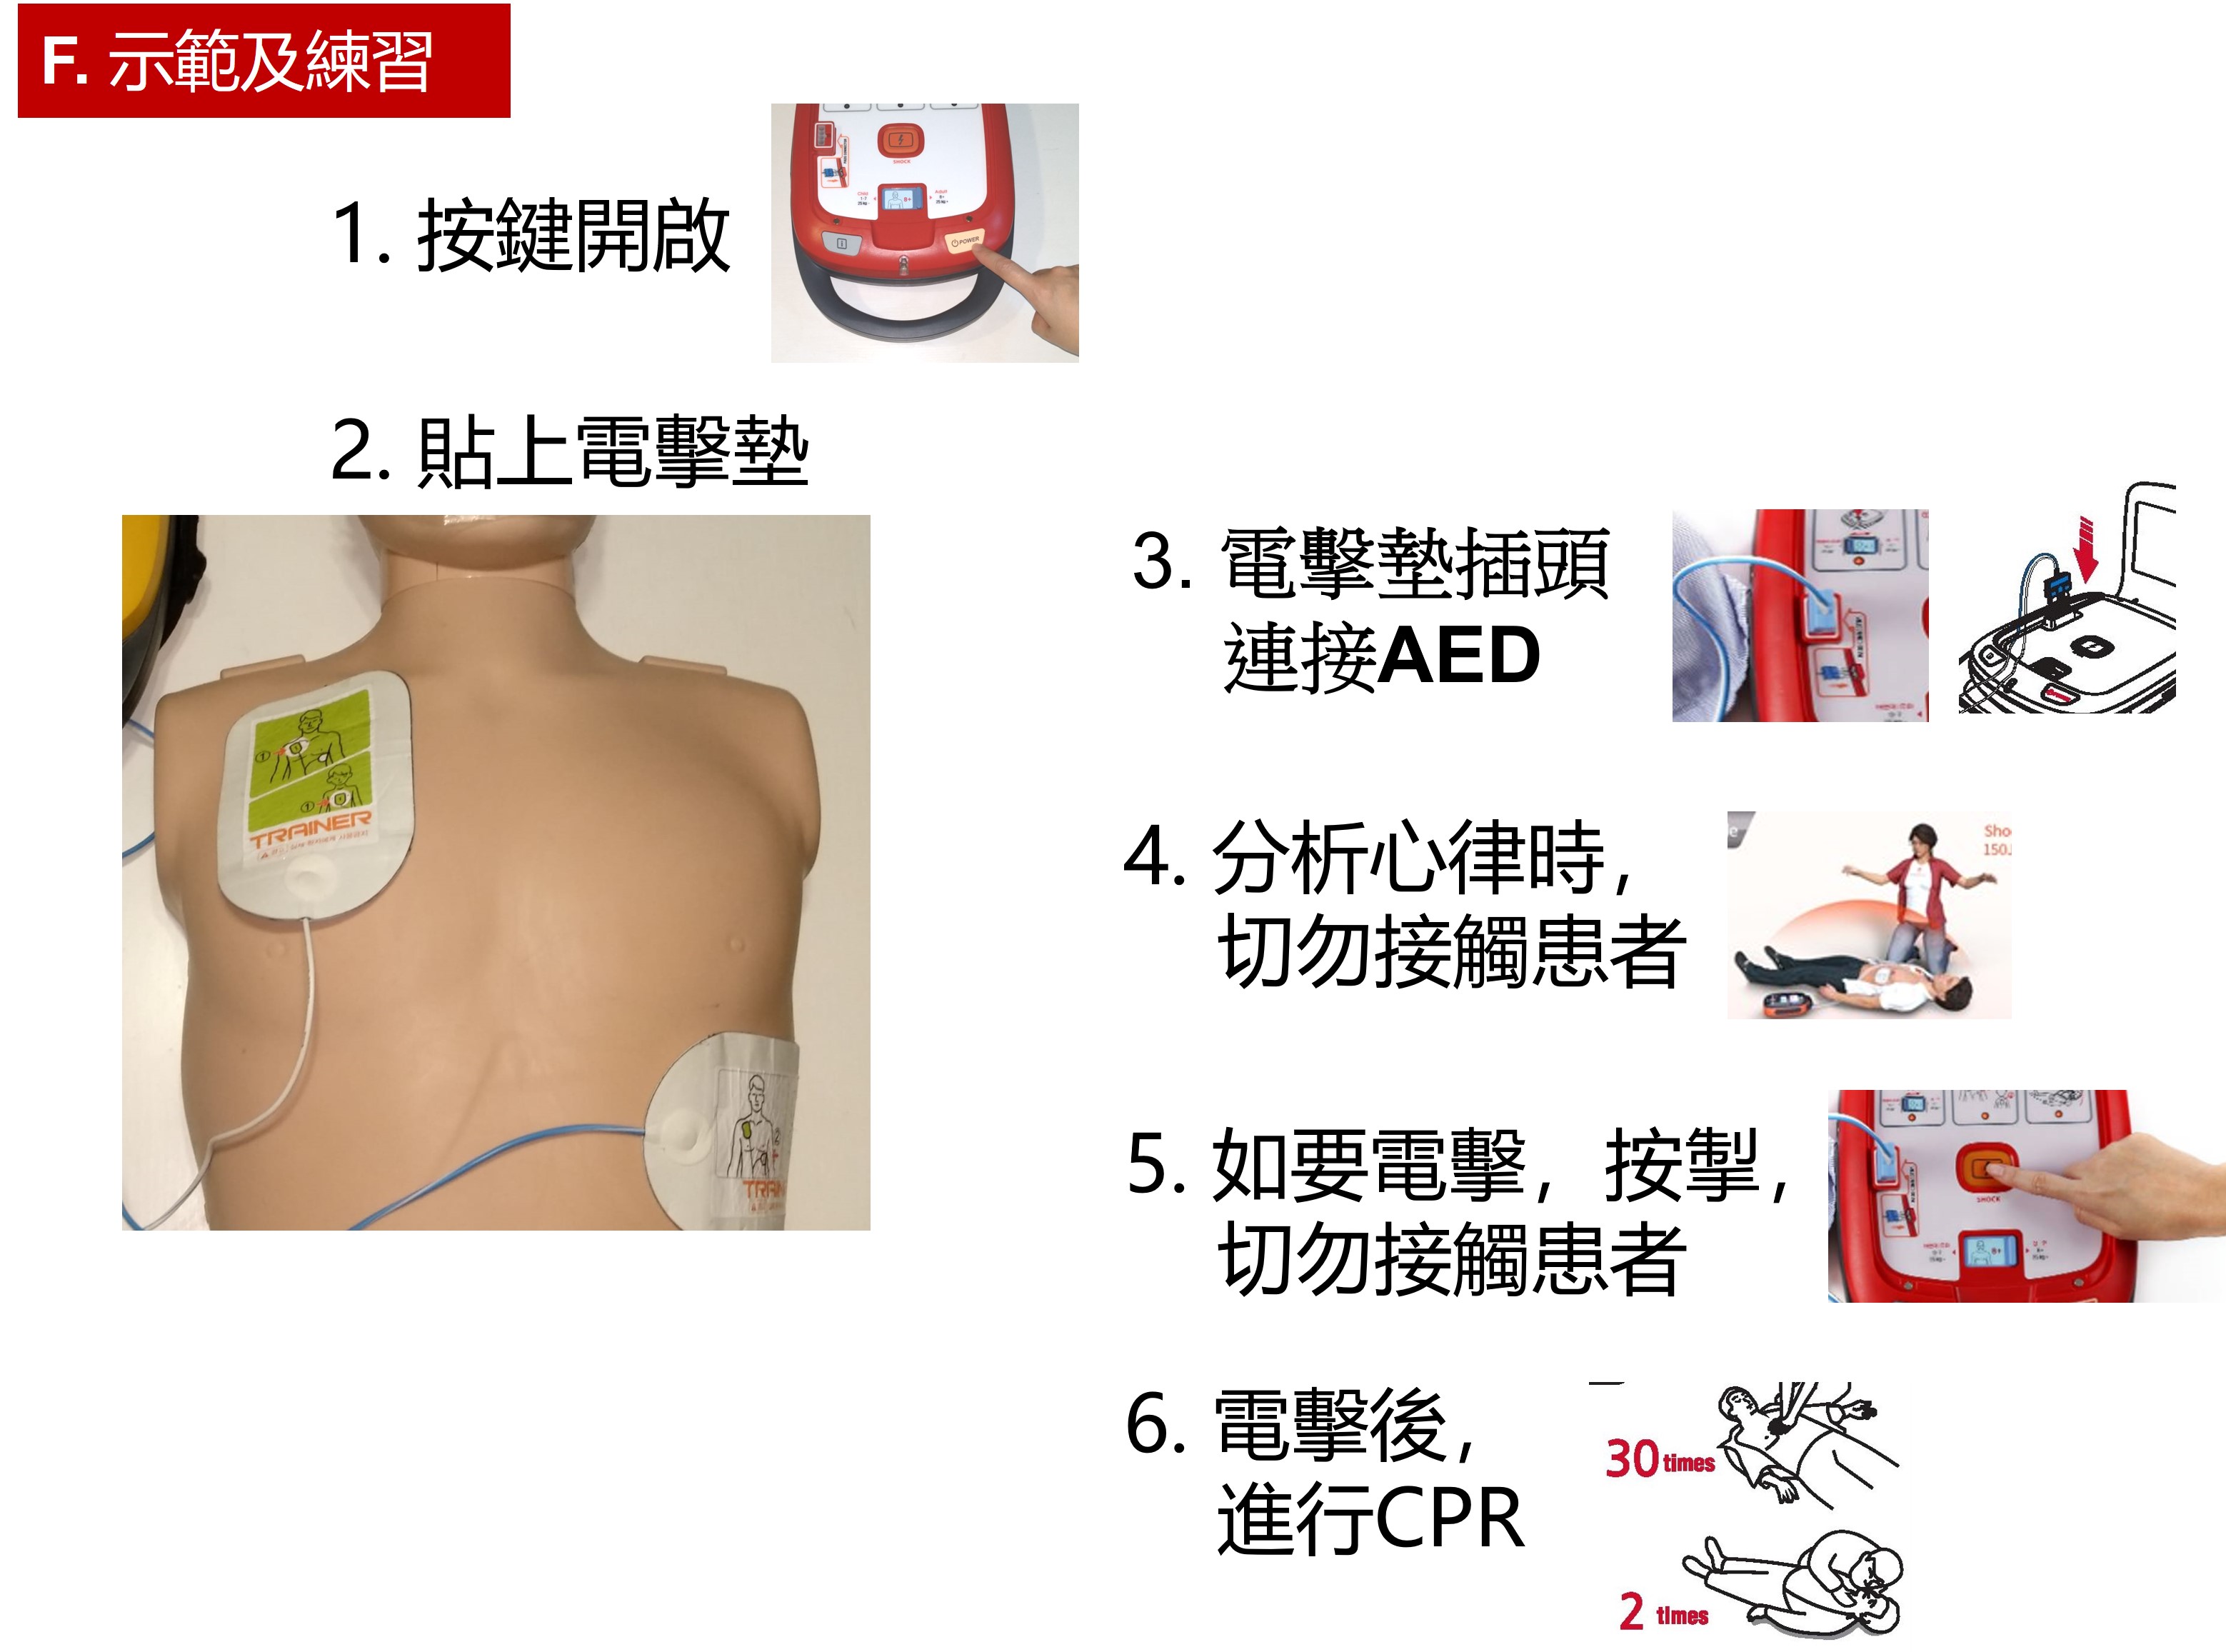 CPR/AED responder kit